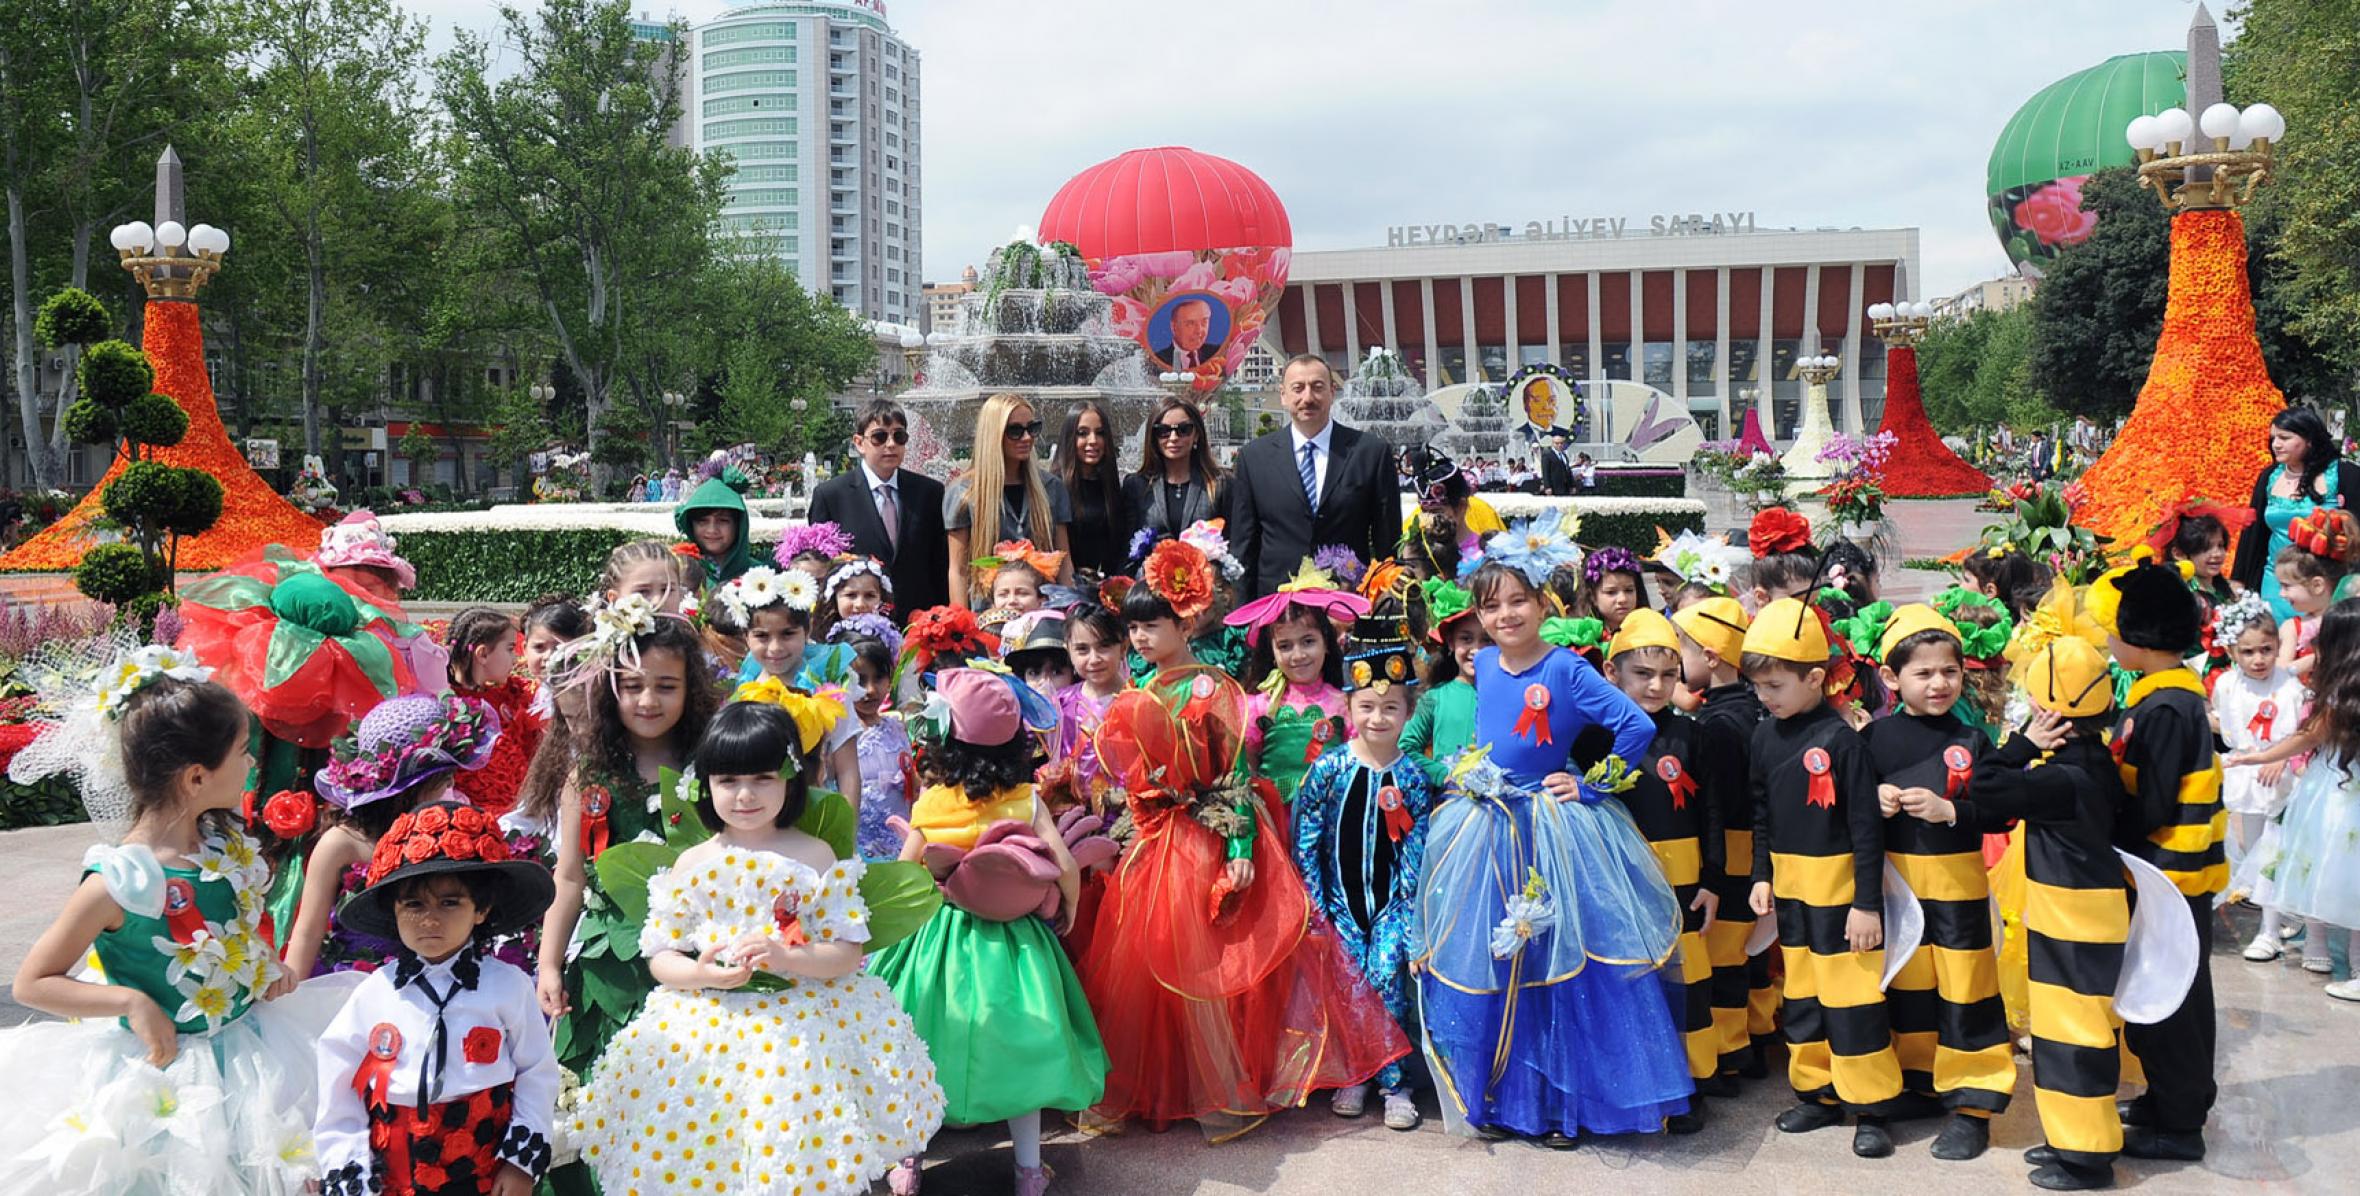 Ilham Aliyev attended the flower festival